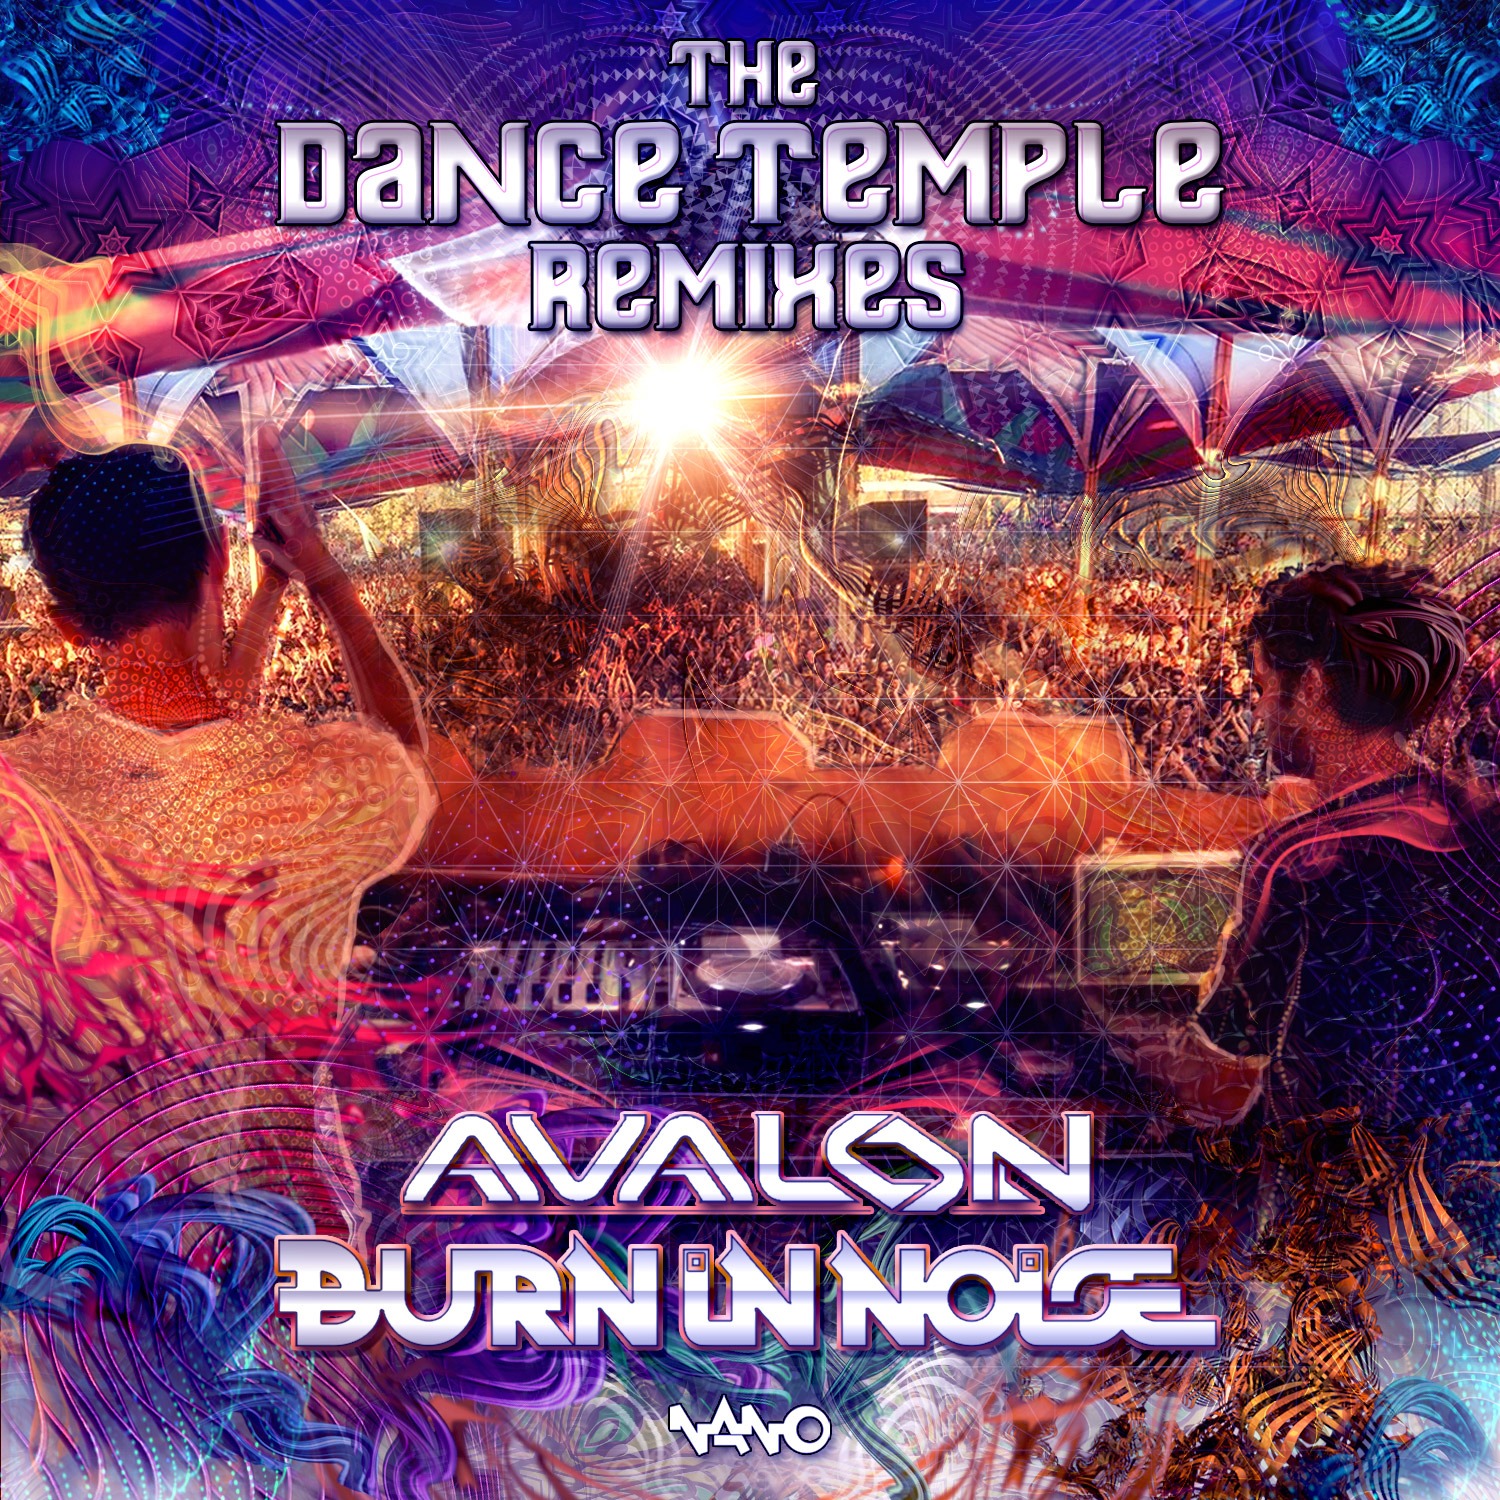 Temple remix. Avalon Remixes. Burn in Noise. Burn in Noise Dream album. Ultimate Technology Avalon Burn in Noise.